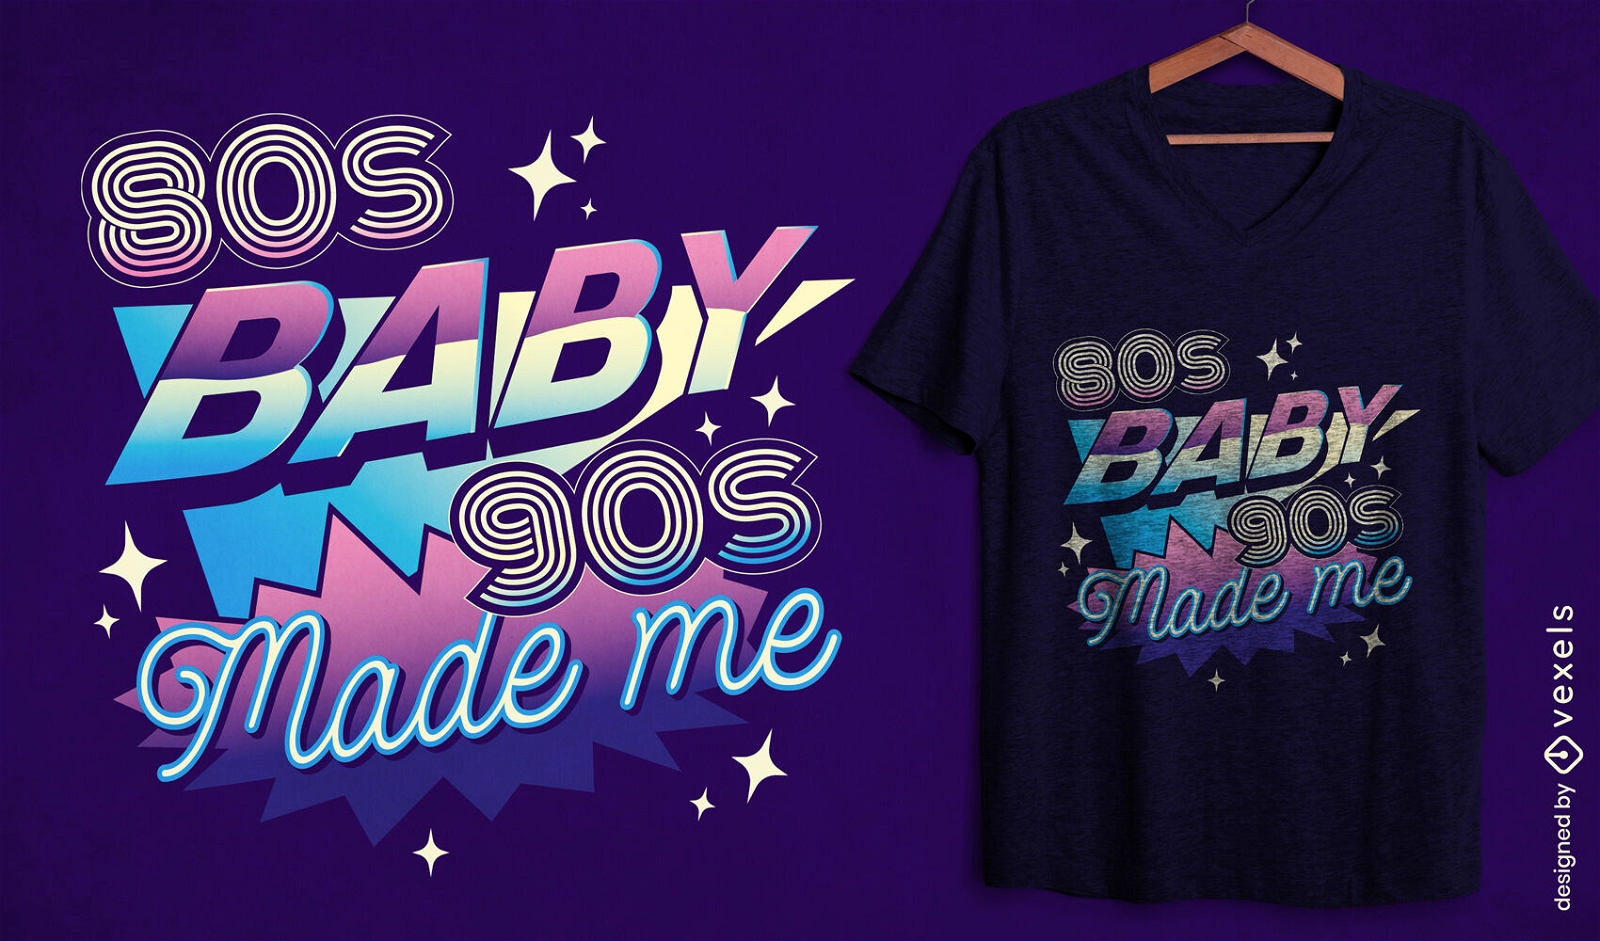 80s and 90s retro quote t-shirt design